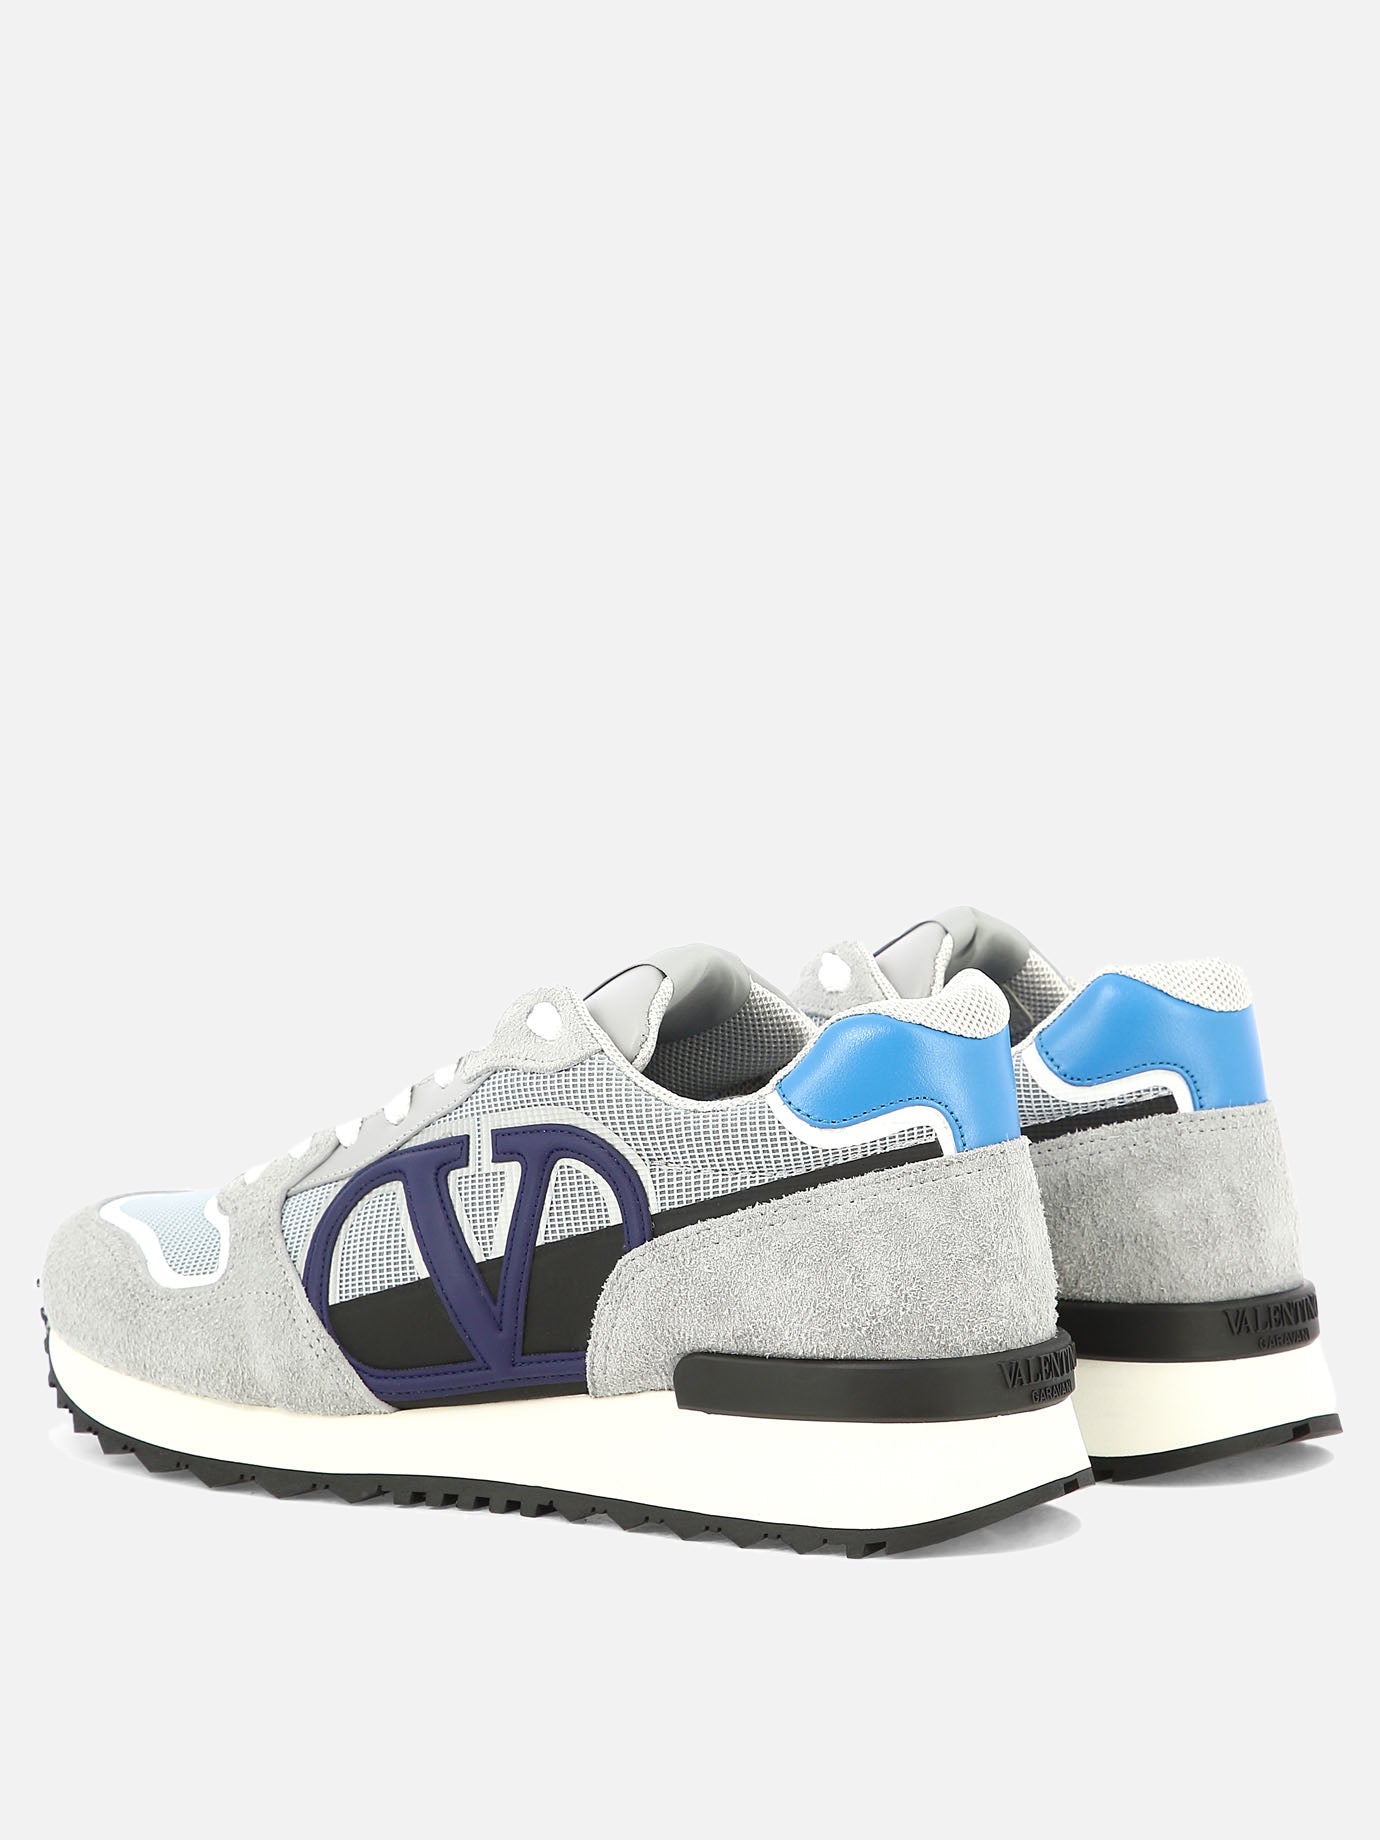 "VLogo" sneakers